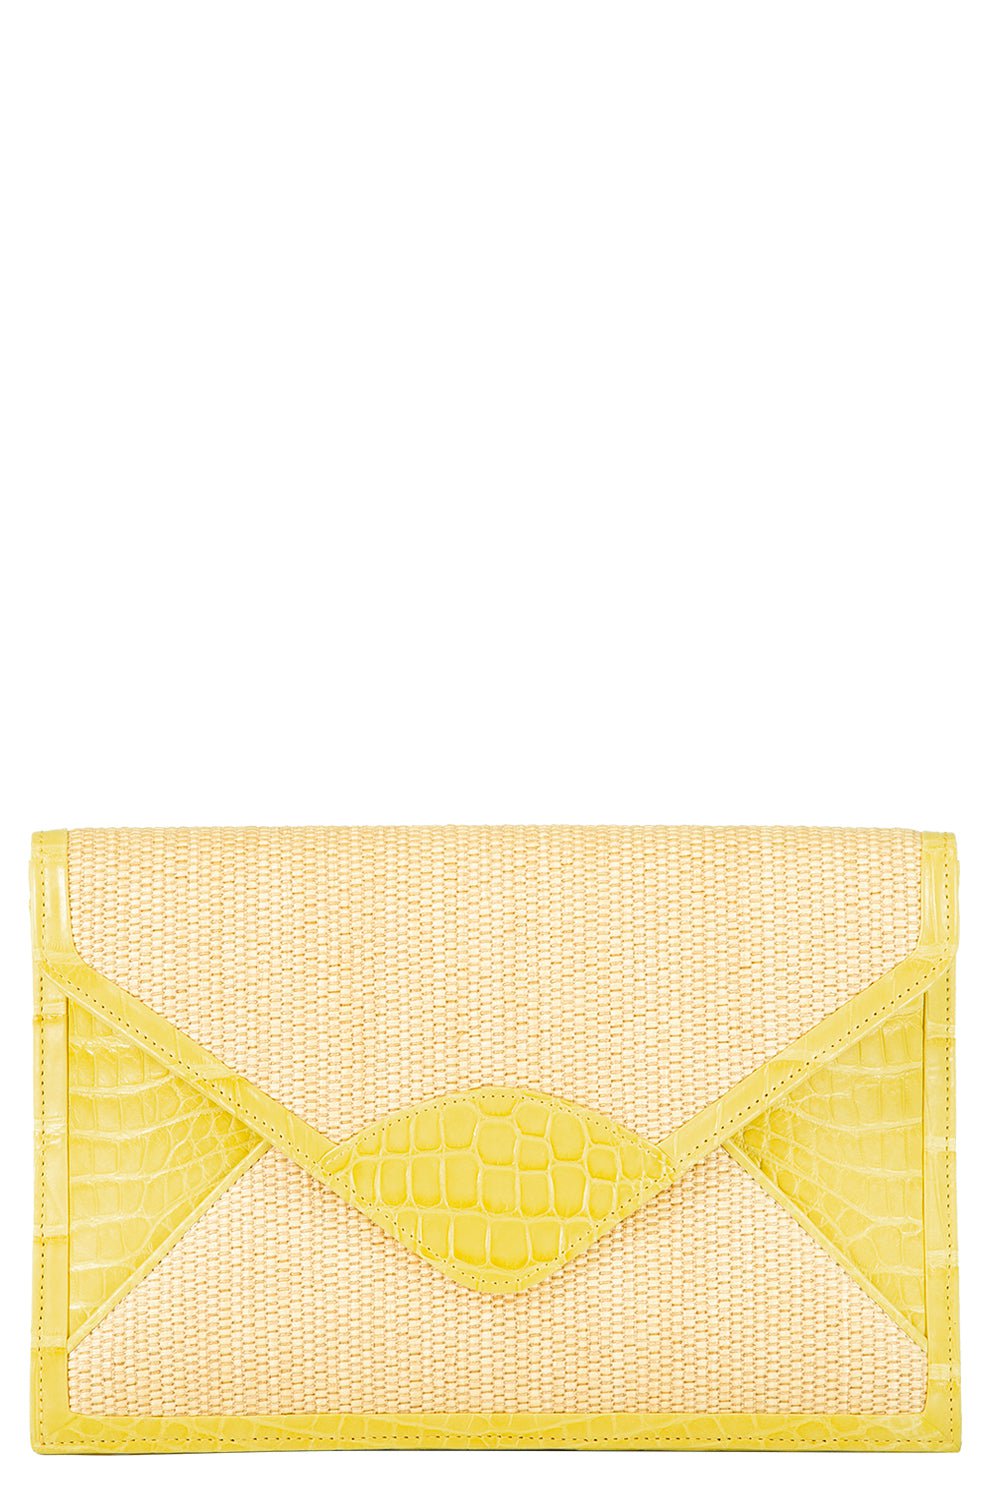 JADA LOVELESS-Envelope Clutch - Canary Yellow-CANARY YELLOW